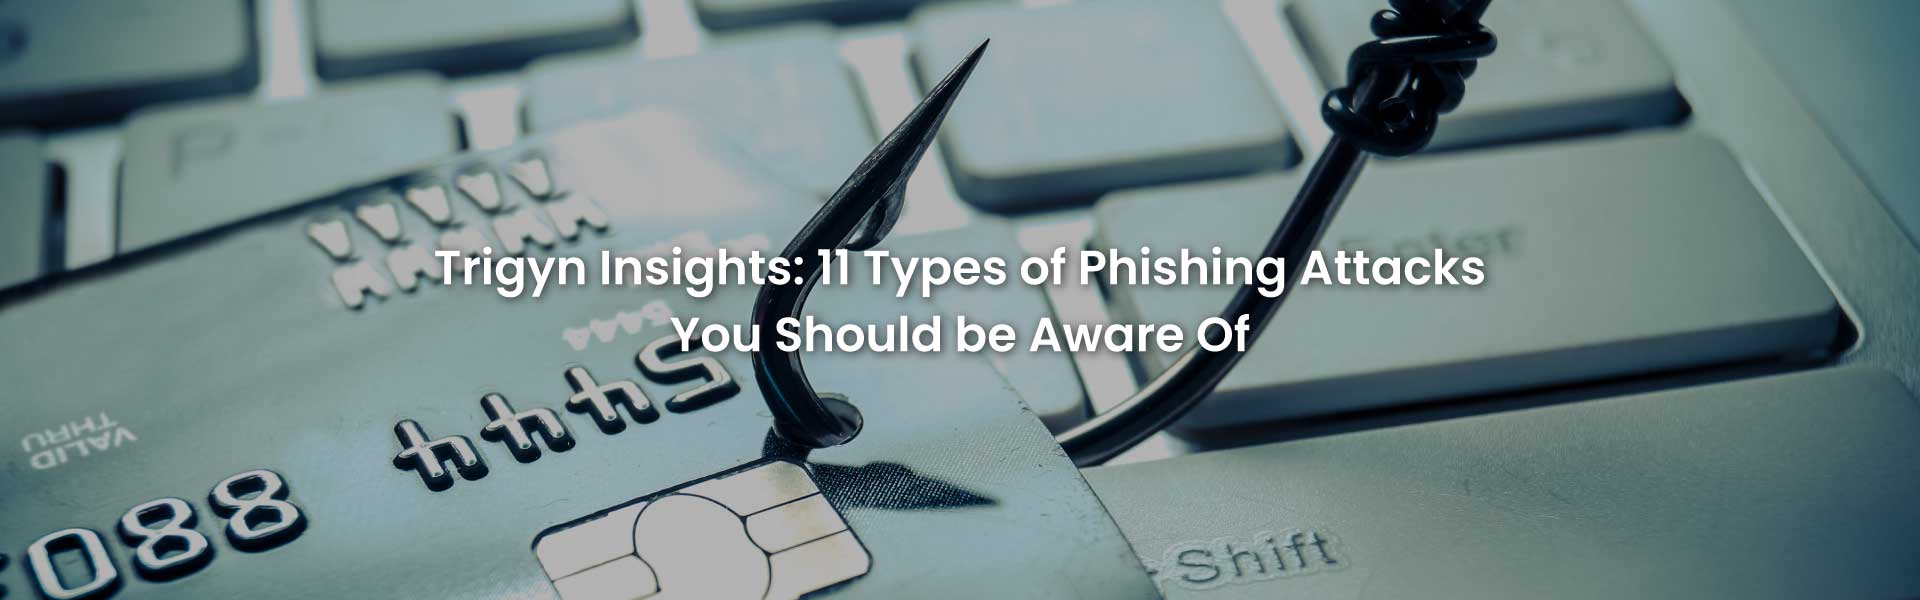 Types of Phishing Attacks